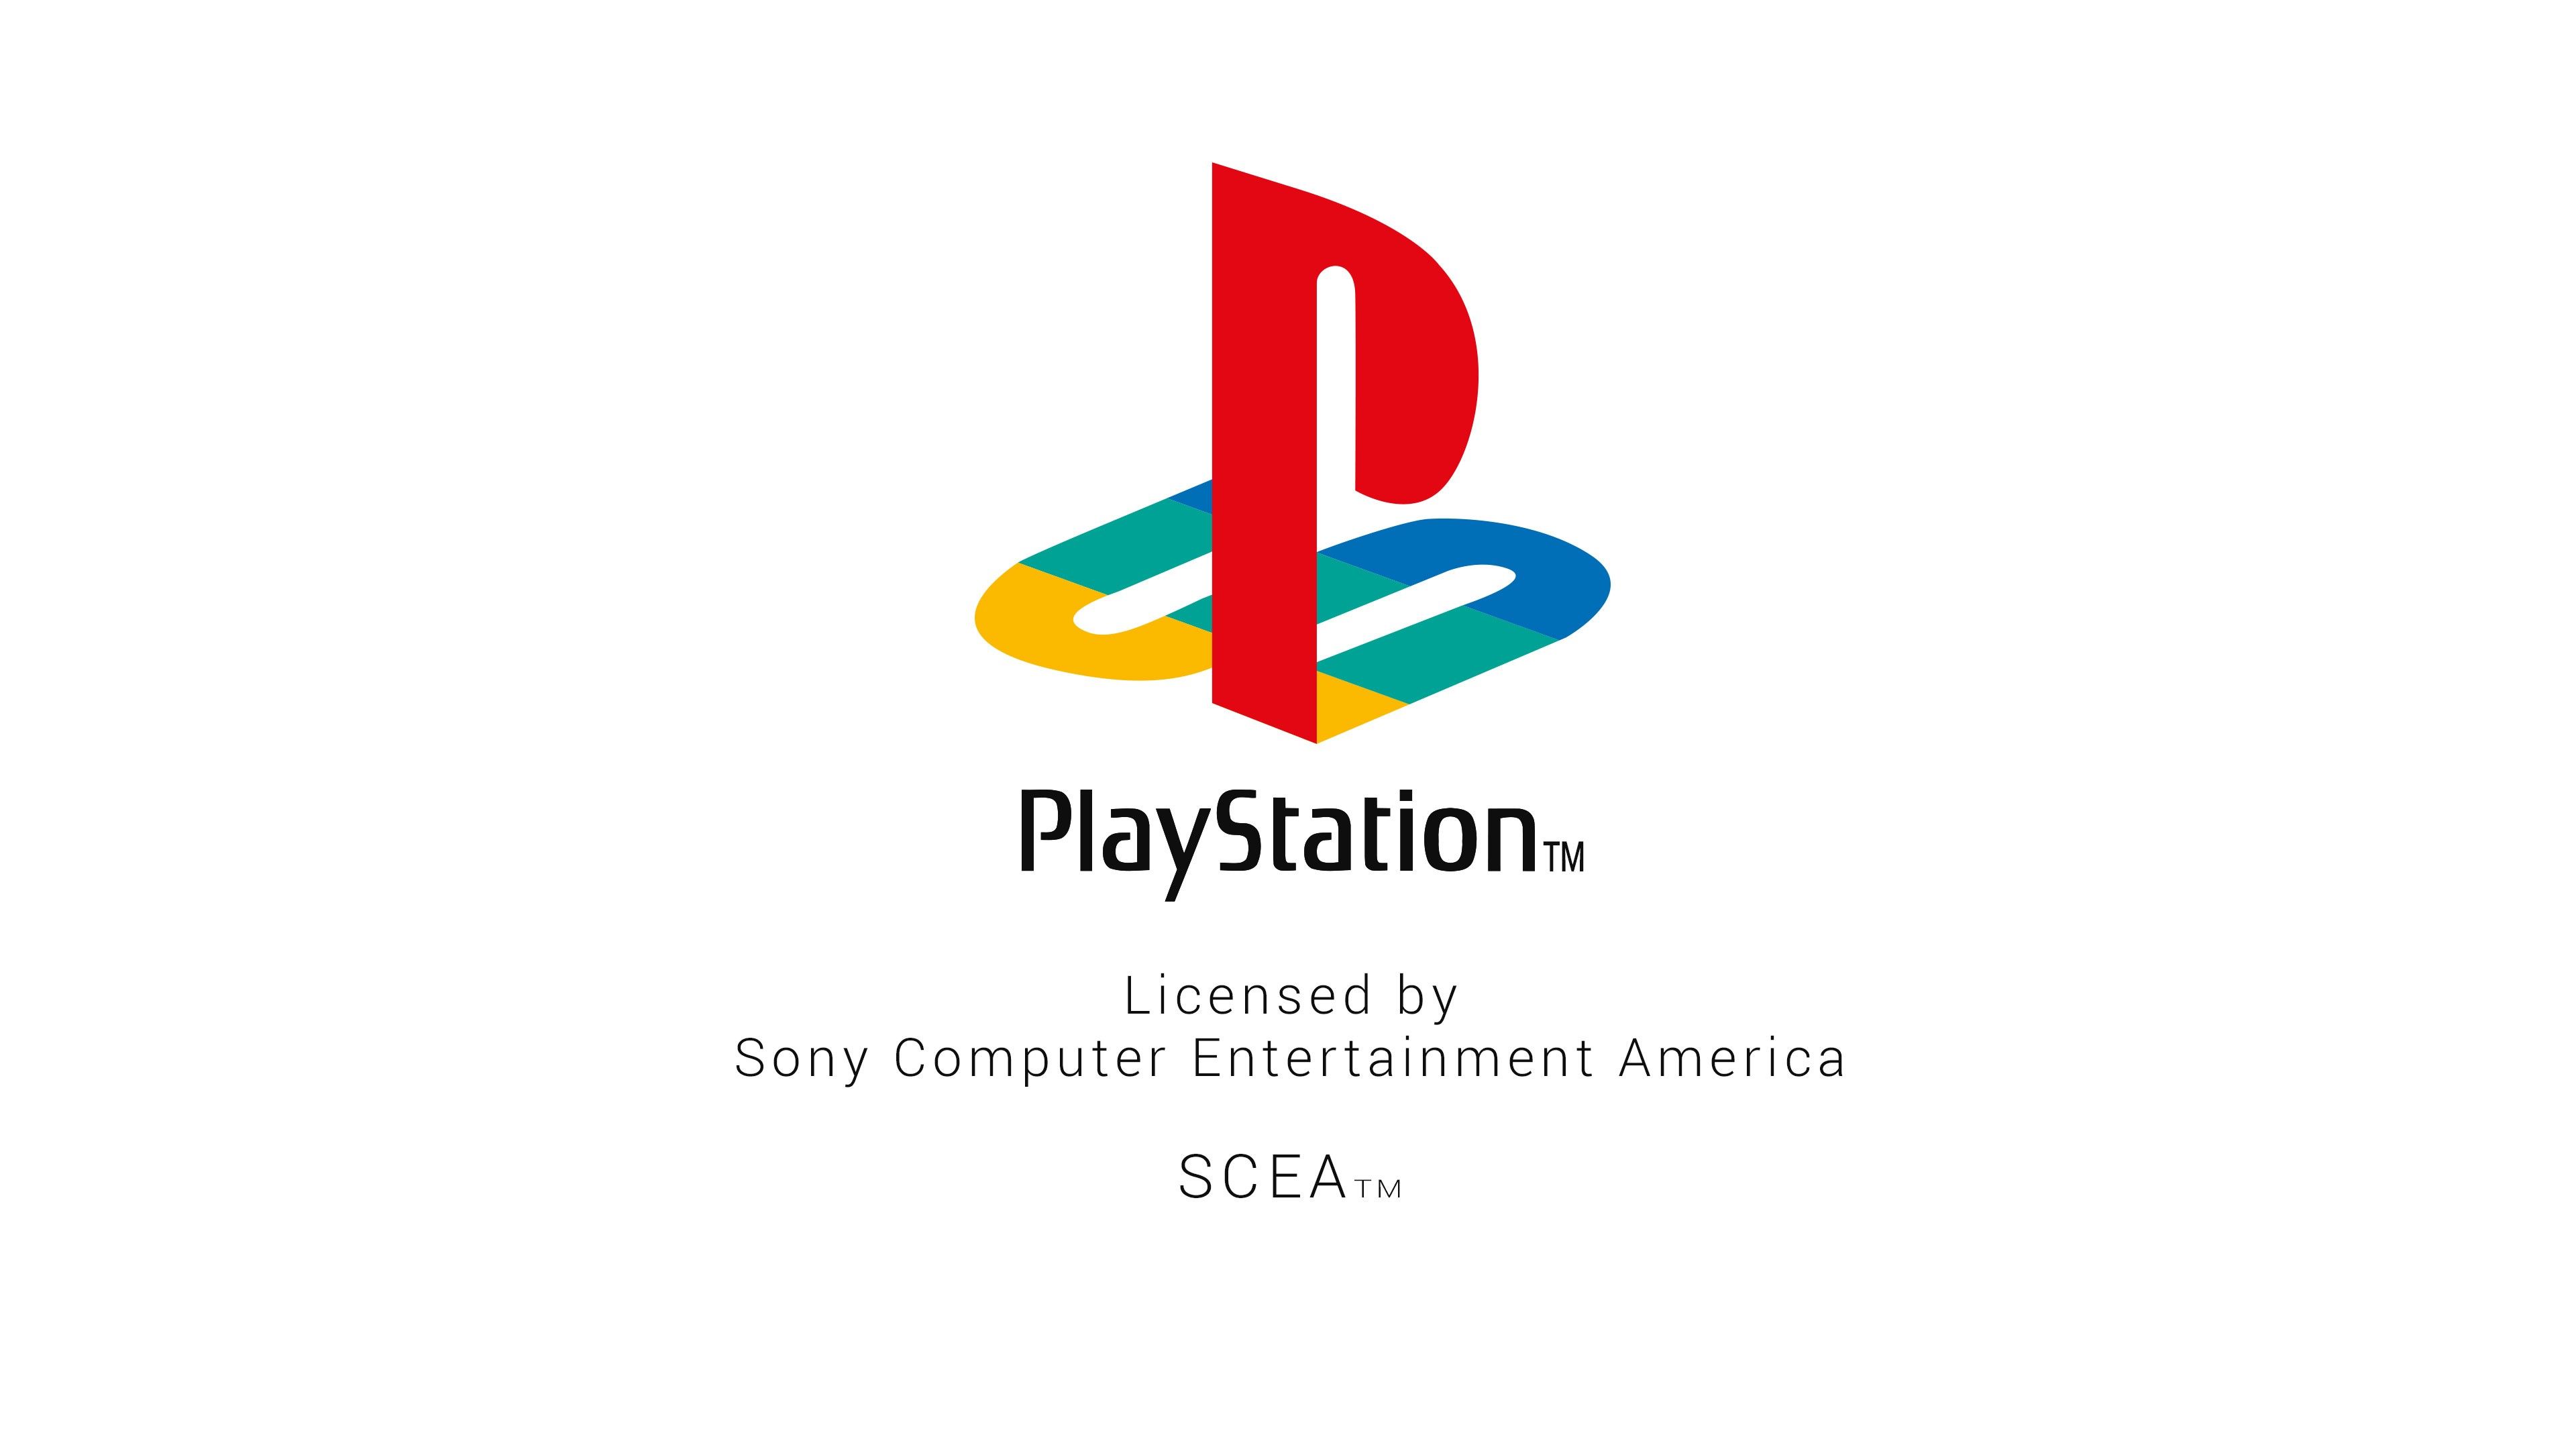 PlayStation Video Games Logo Sony White 3840x2160 UHD Wallpaper. Walldump HD and UHD Wallpaper